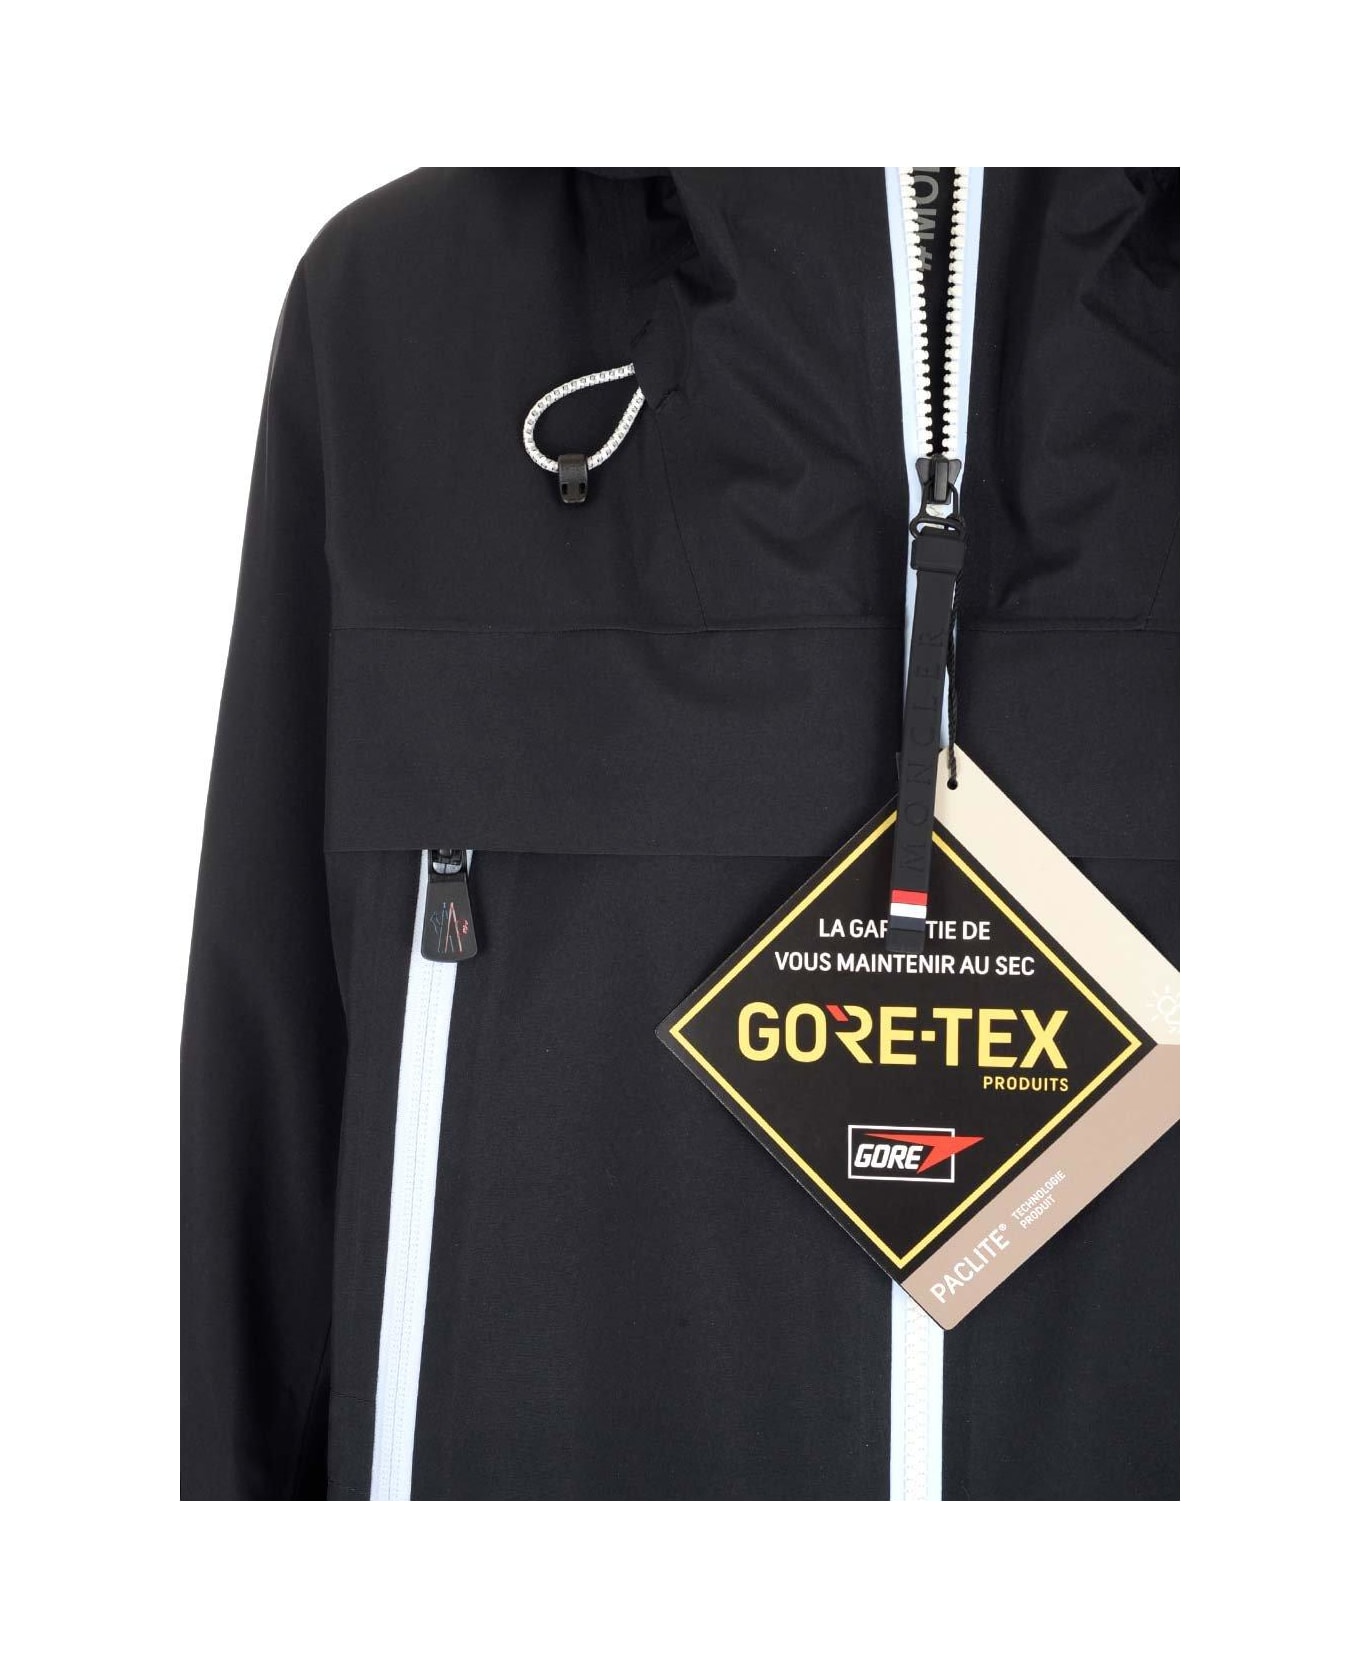 Moncler Grenoble Zip-up Hooded Jacket - Black